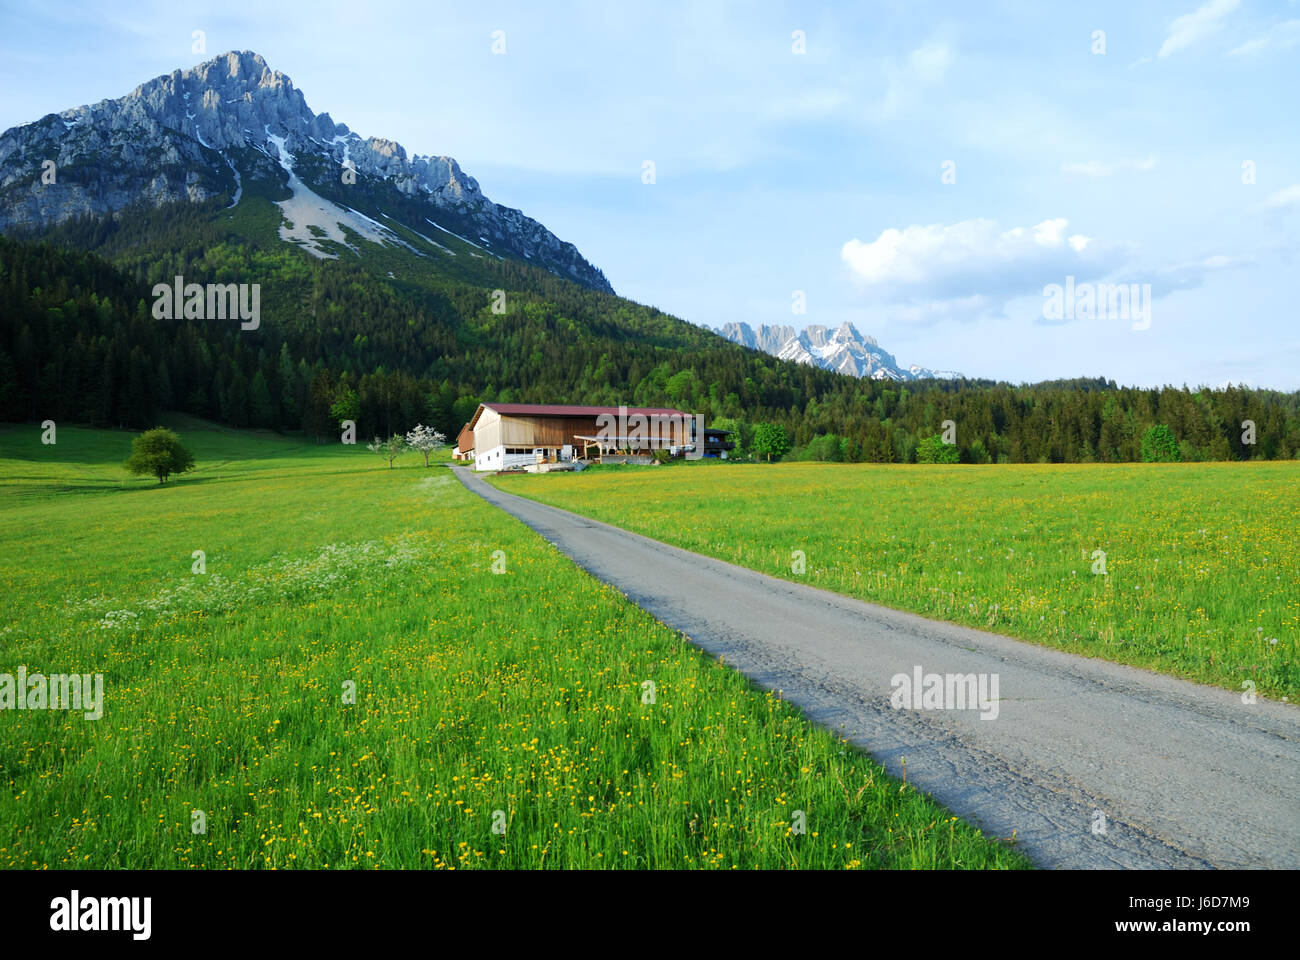 alps austria farm idyll country landscape scenery countryside nature mountain Stock Photo